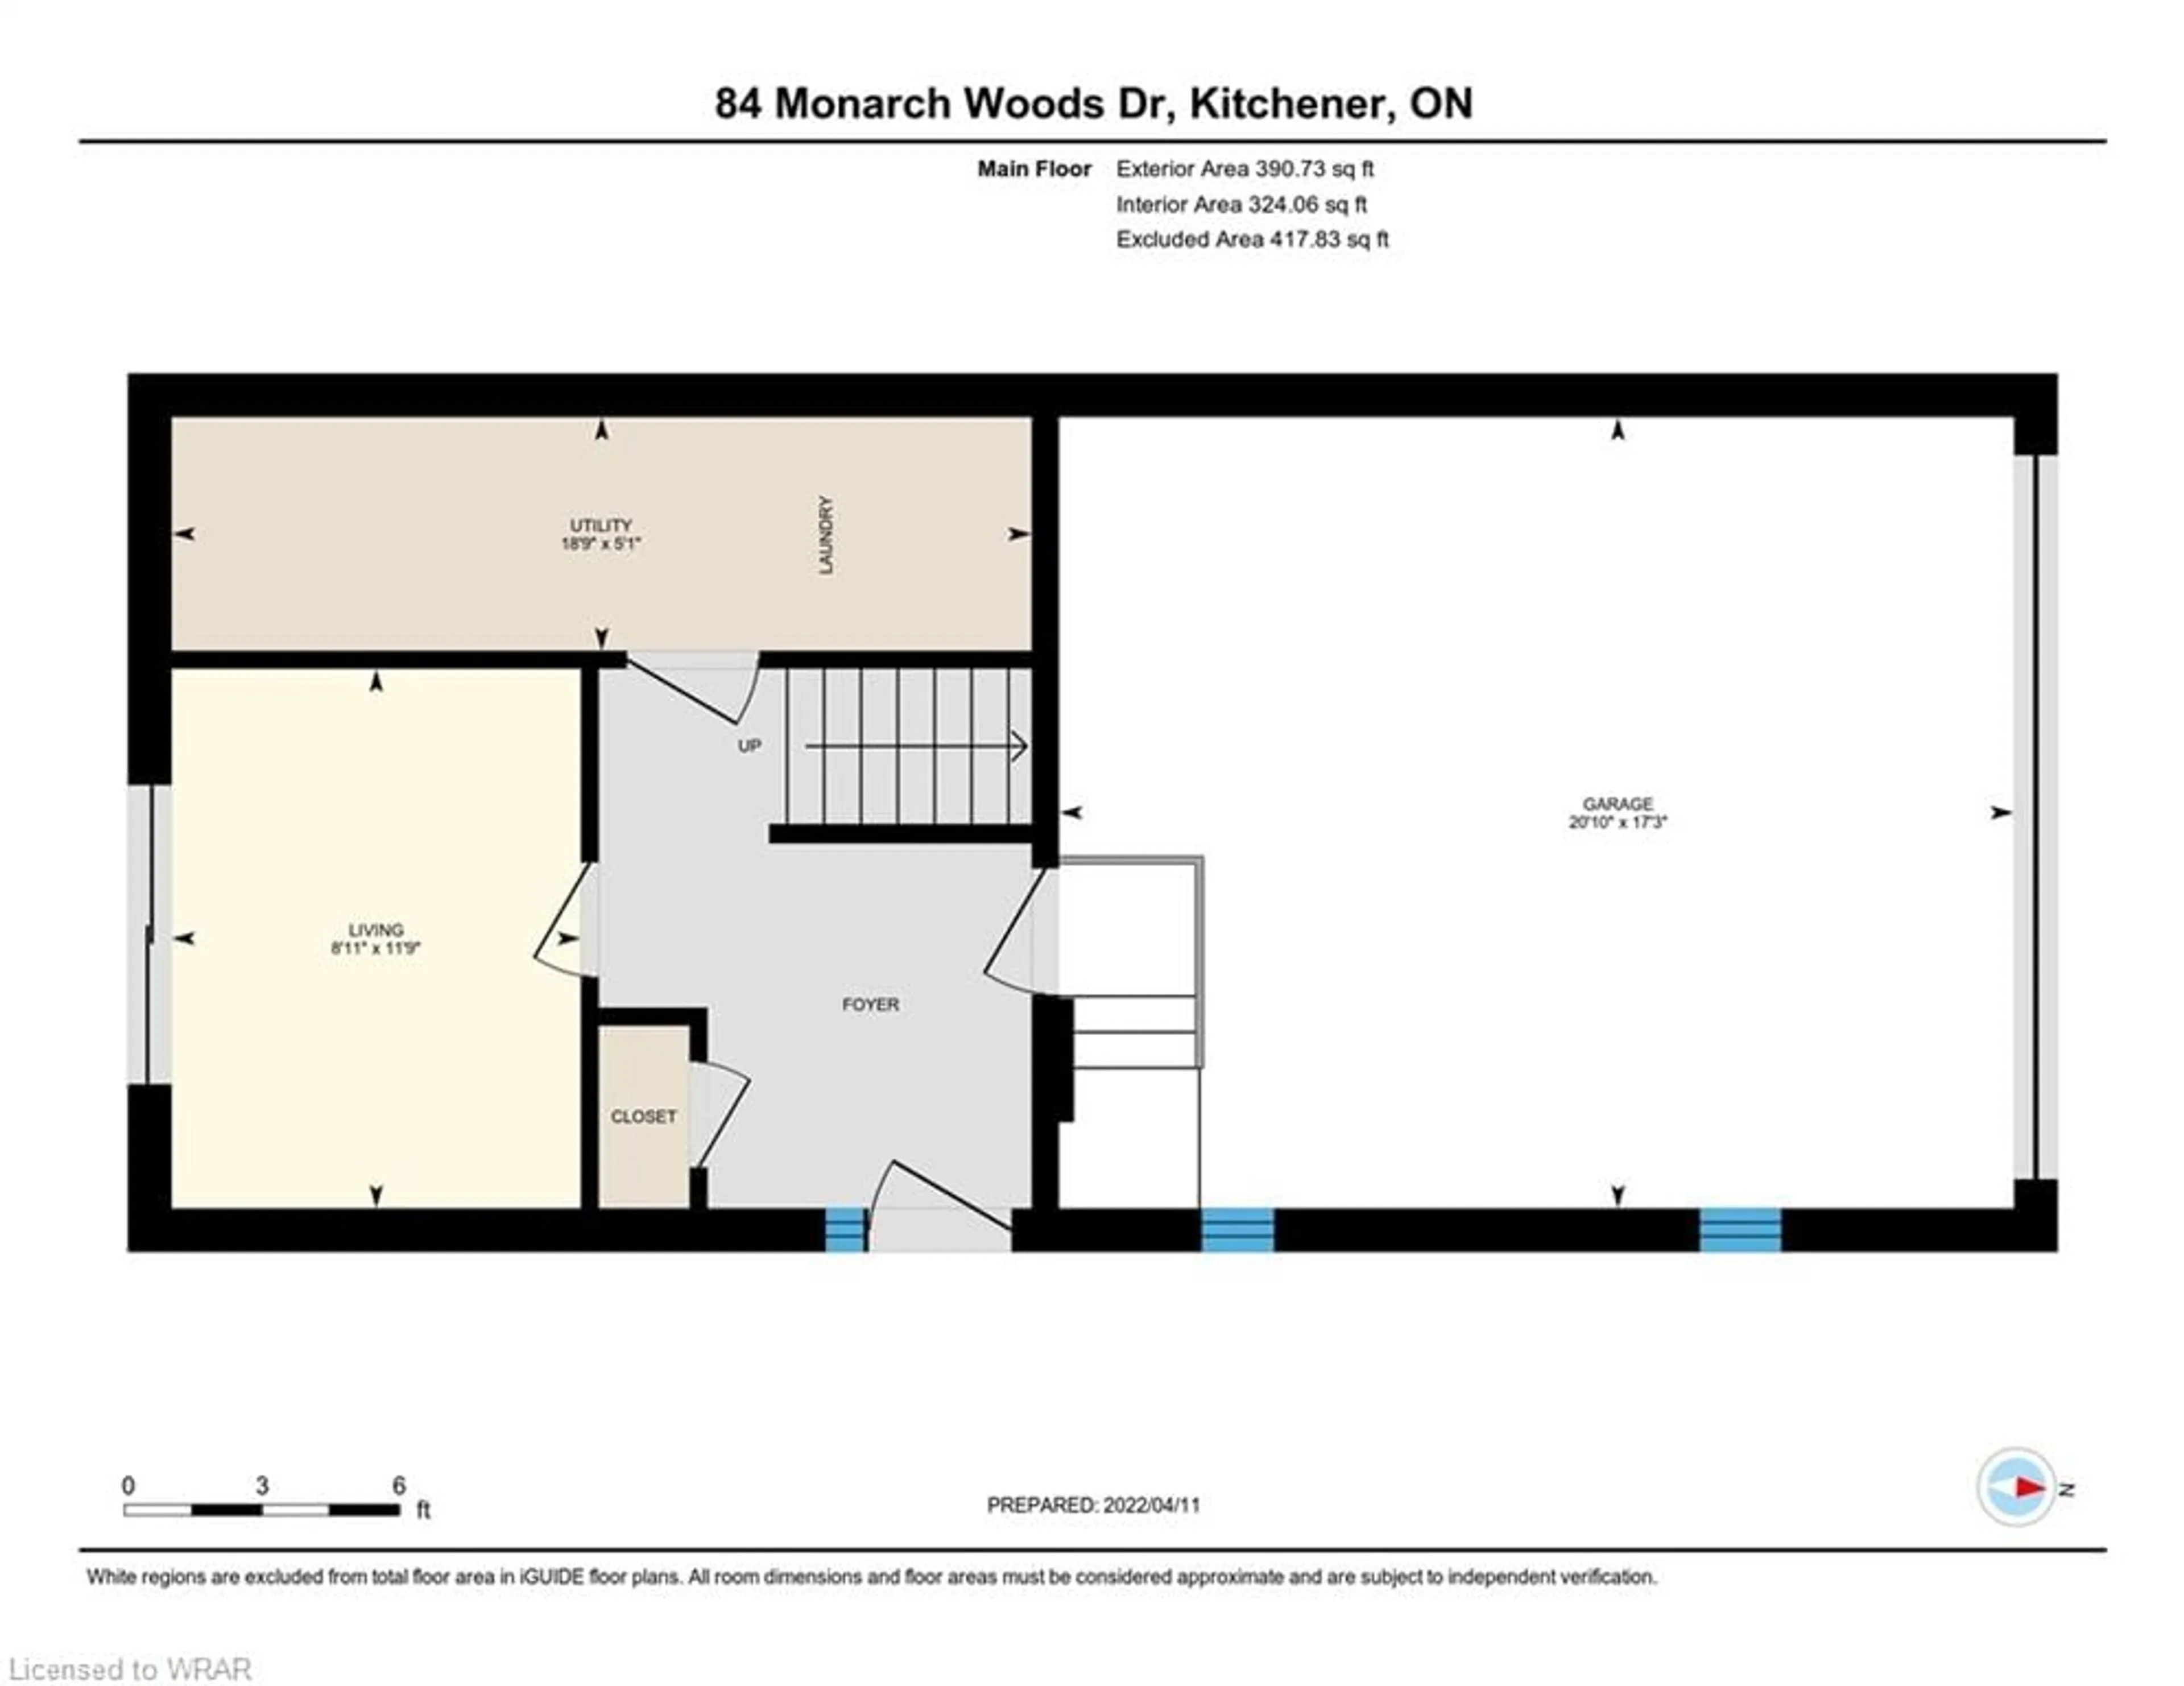 Floor plan for 84 Monarch Woods Dr, Kitchener Ontario N2P 2Y9